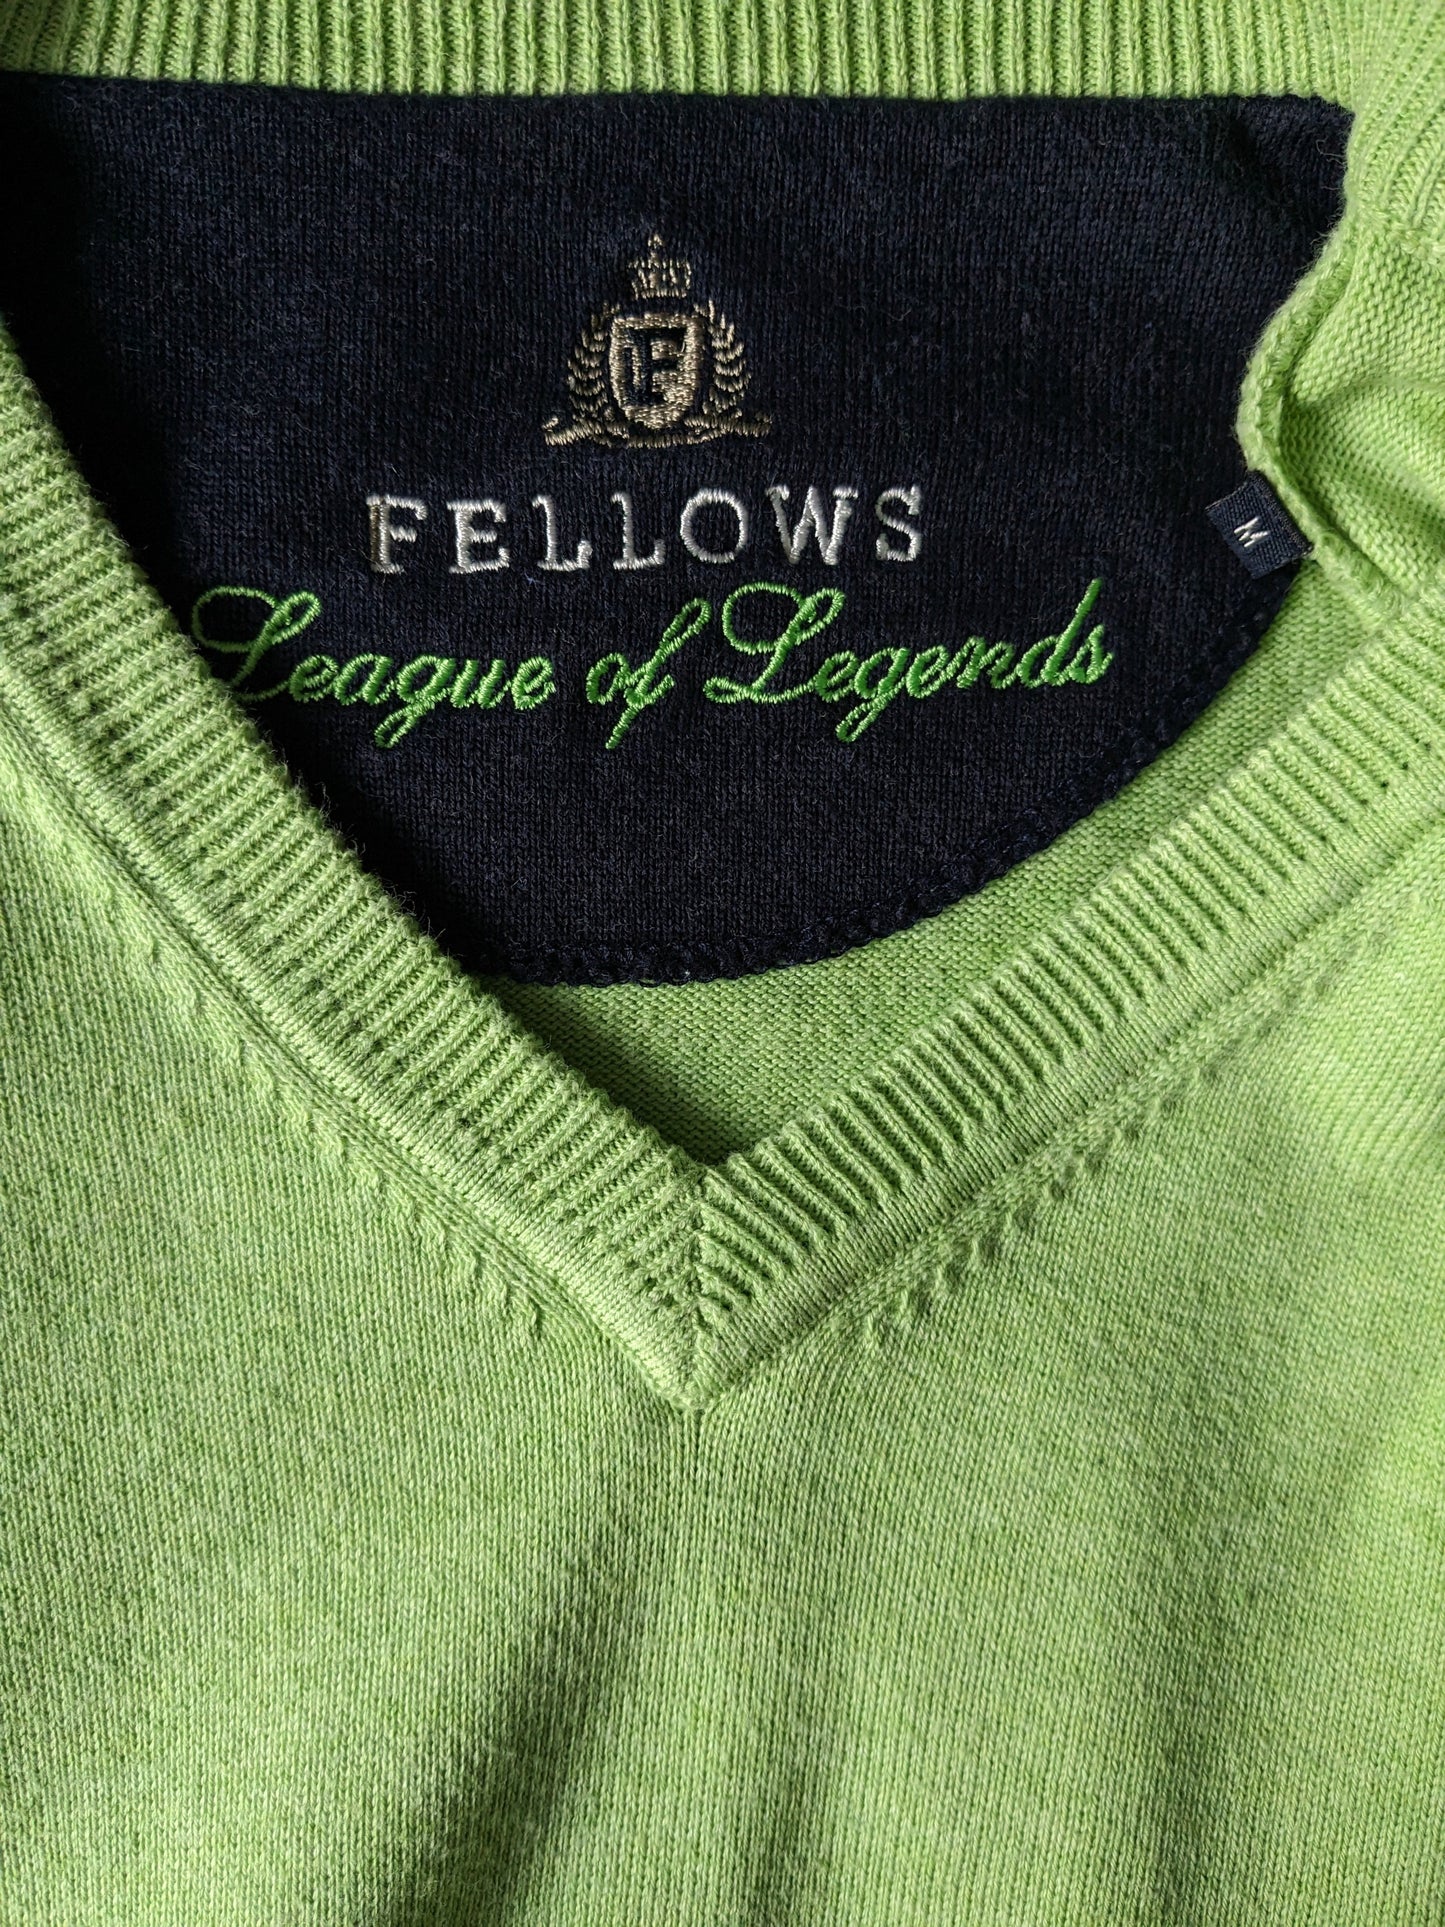 Fellows league of legends v-hals trui. Groen. Maat M.